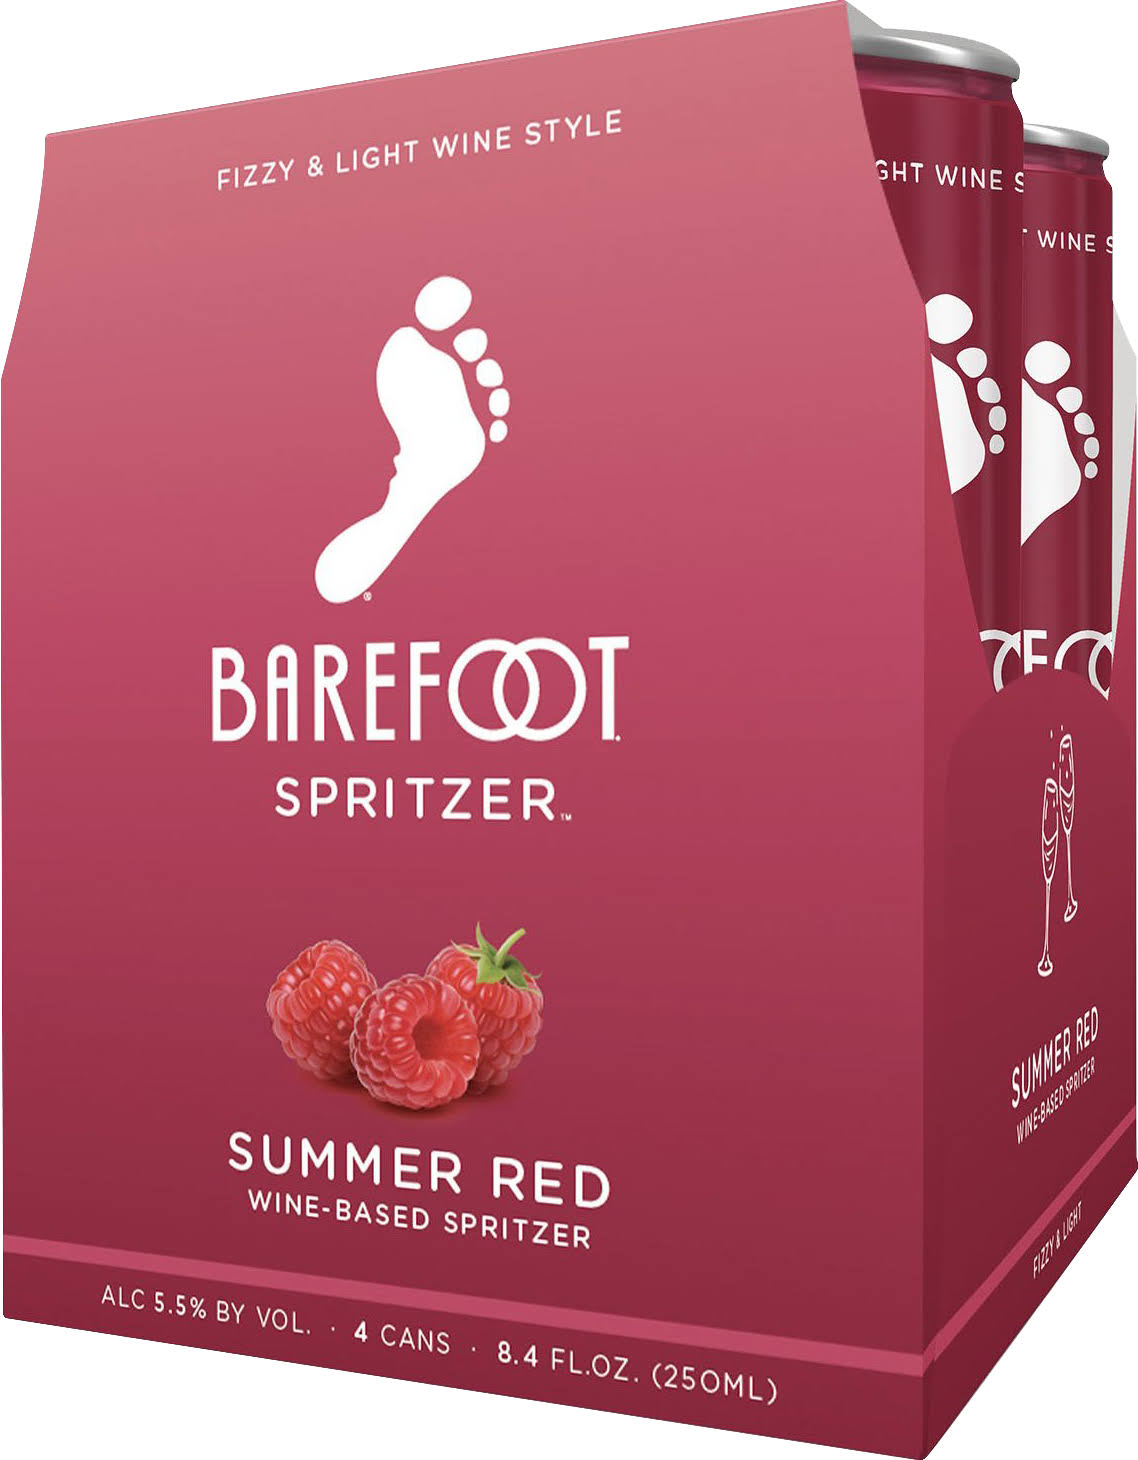 Barefoot Spritzer, Summer Red - 4 pack, 8.4 fl oz cans